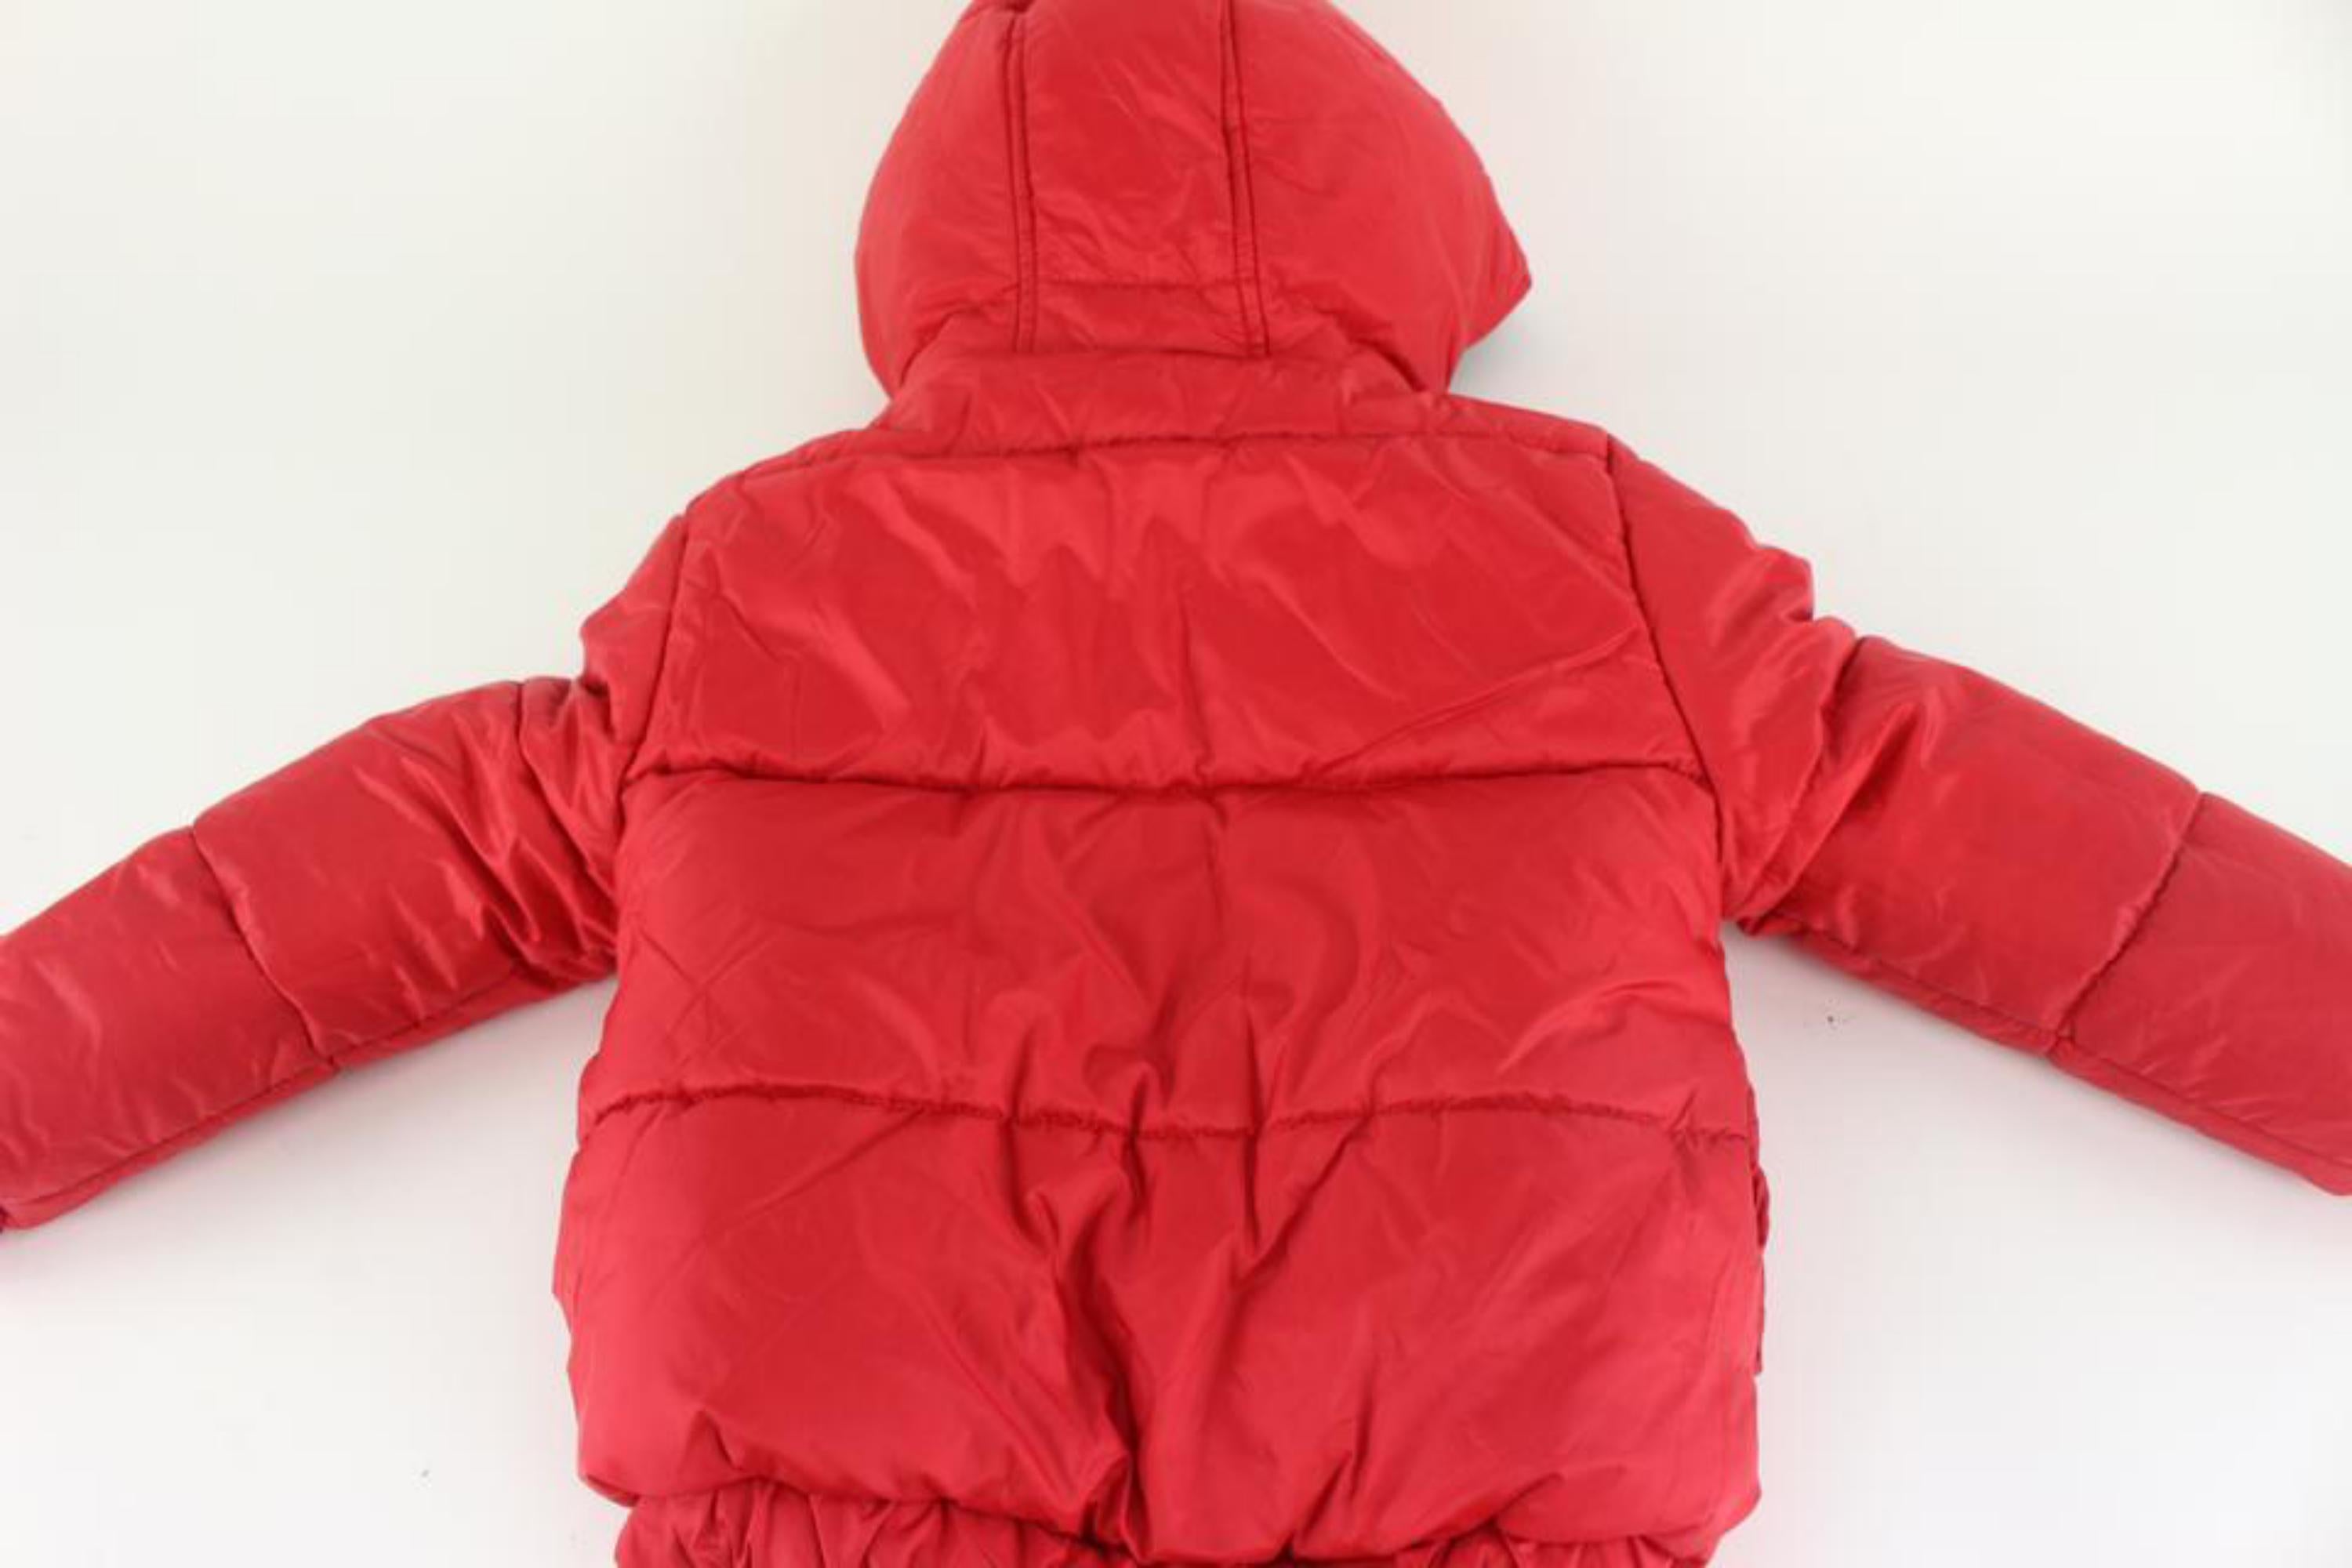 Fendi Toddler Size 3T Monogram x Red Puffer Coat Puffy Jacket Toddler 0FF22 2